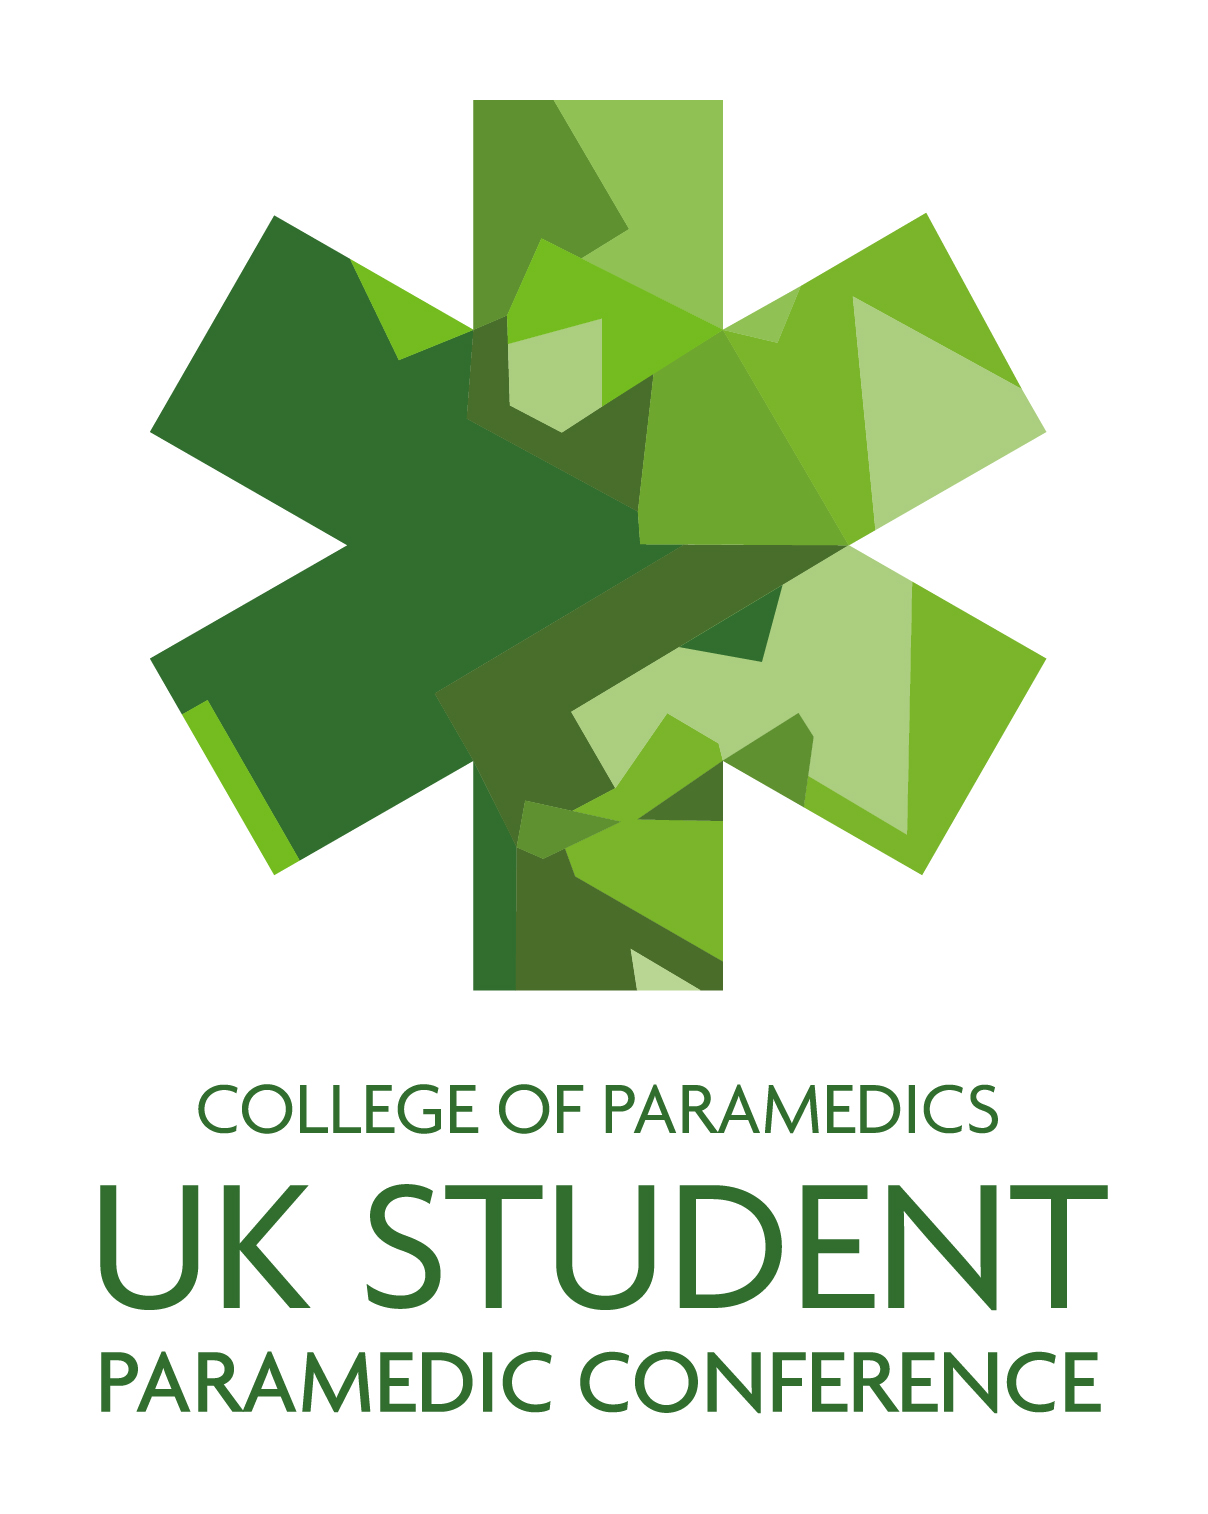 UK Student Paramedic Conference 2022 - Postponed